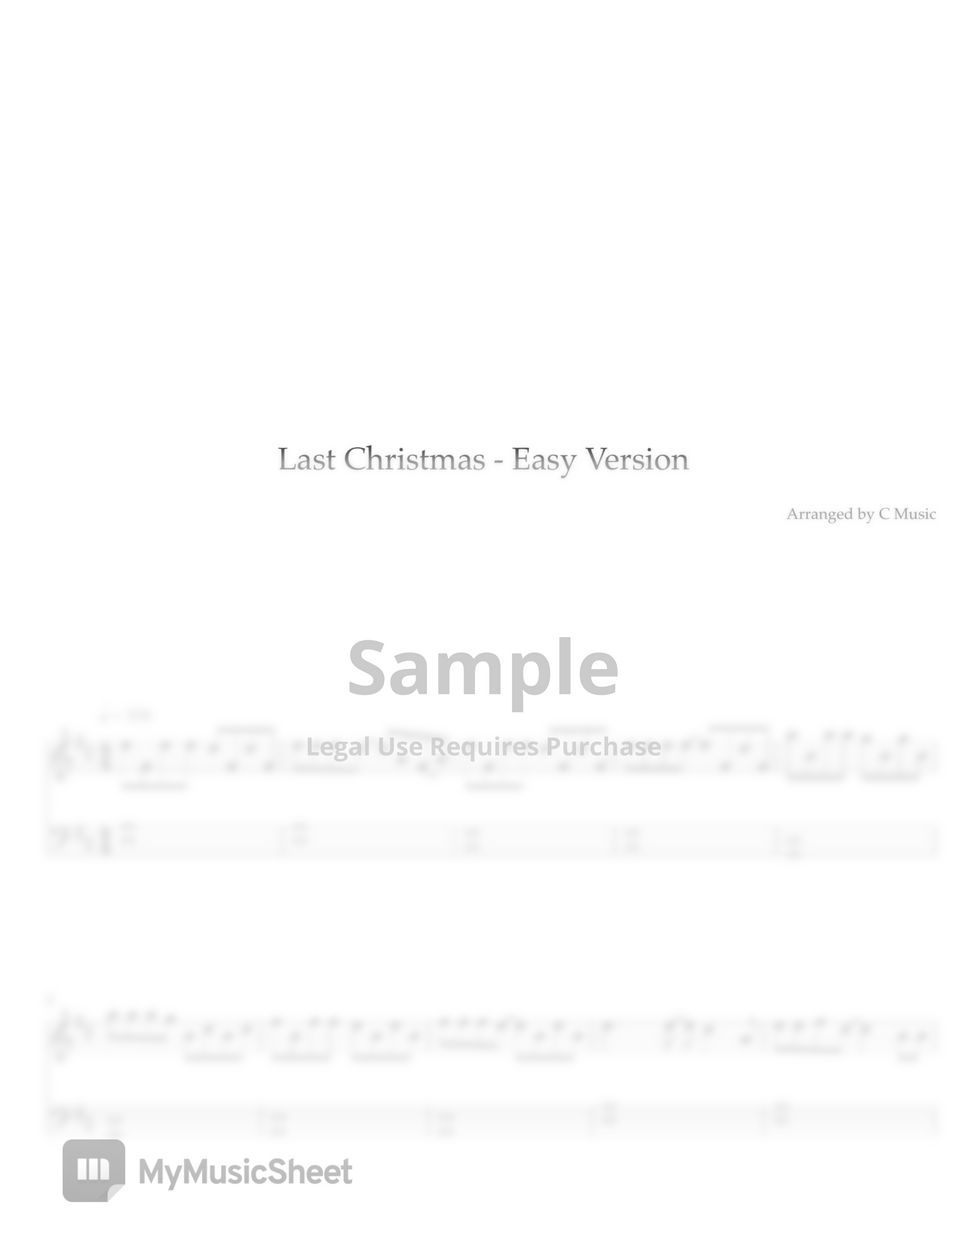 Wham! - Last Christmas (Easy Version) by C Music